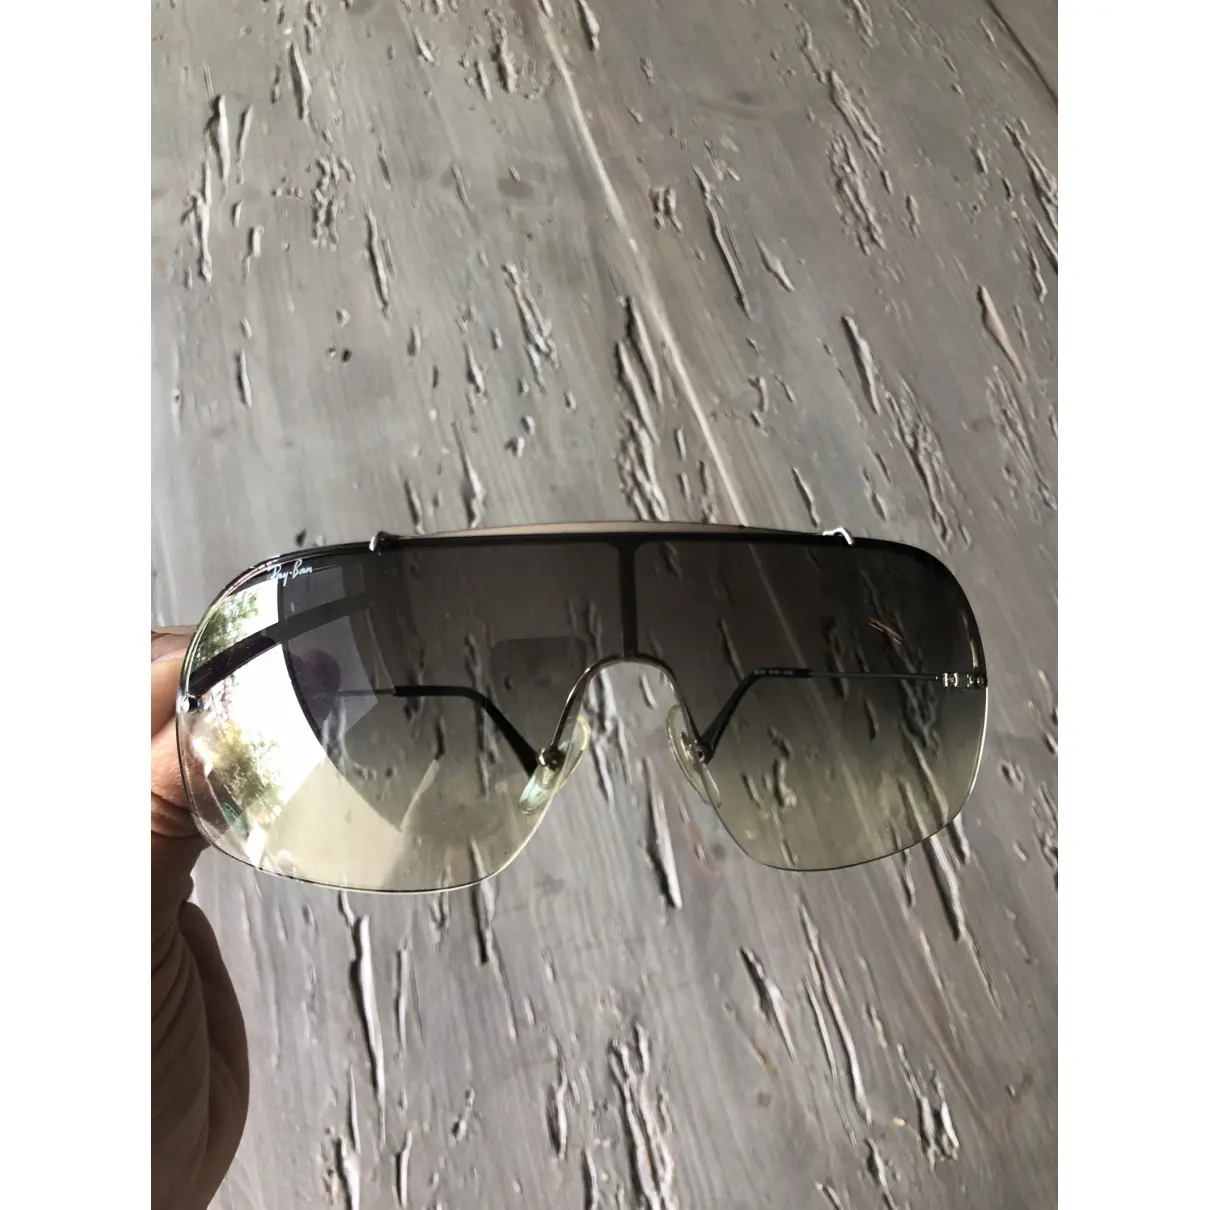 Goggle glasses Ray-Ban